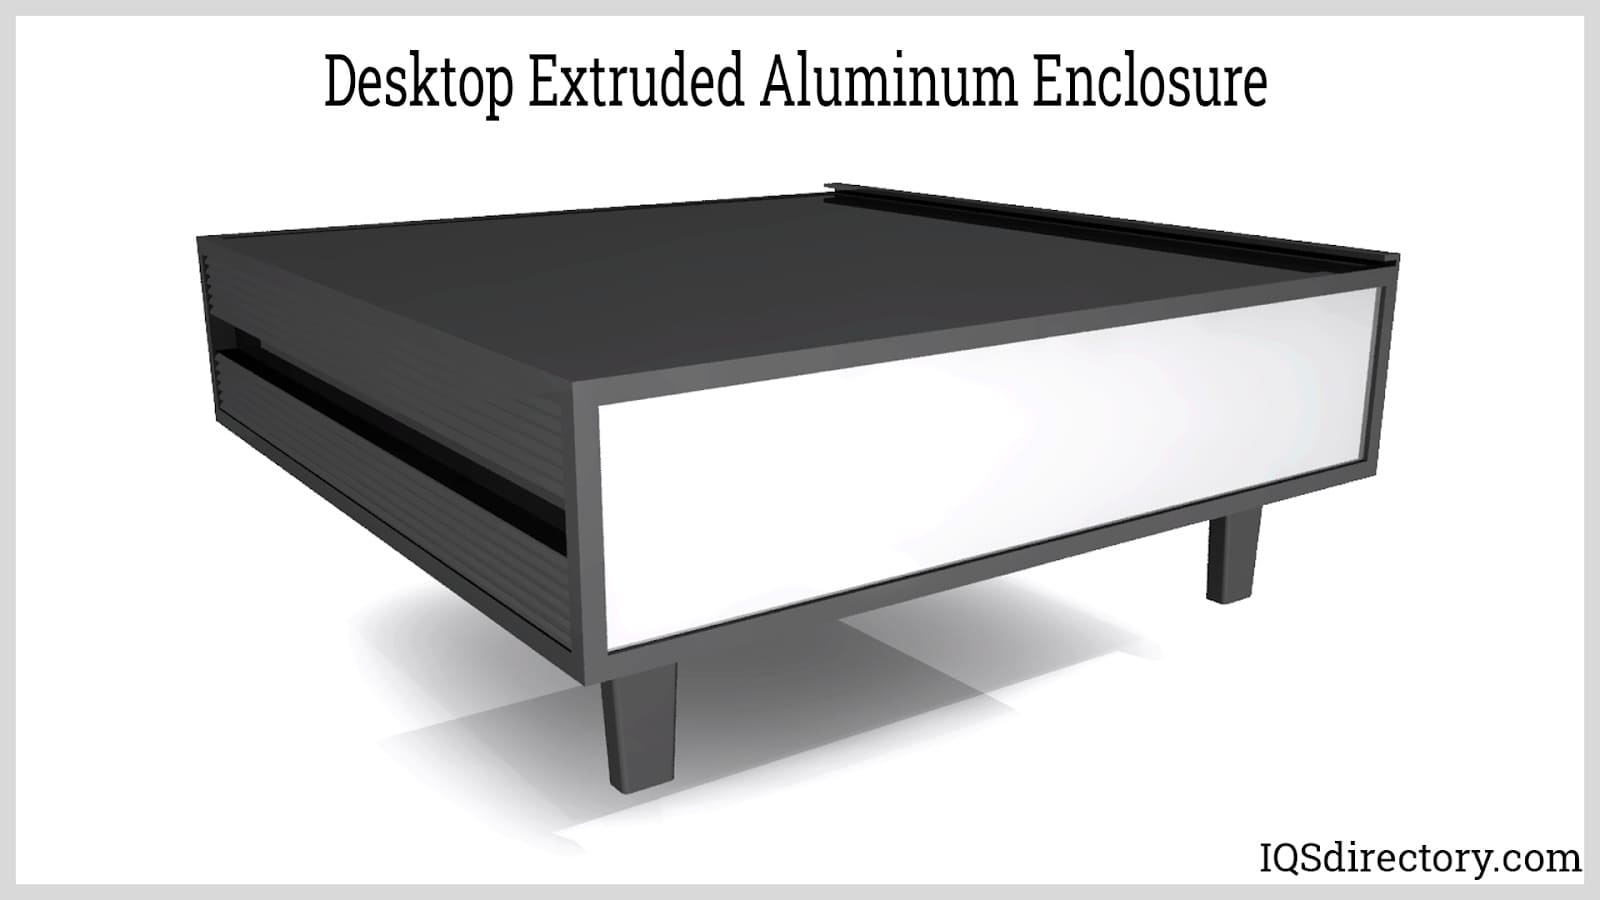 Desktop Extruded Aluminum Enclosure